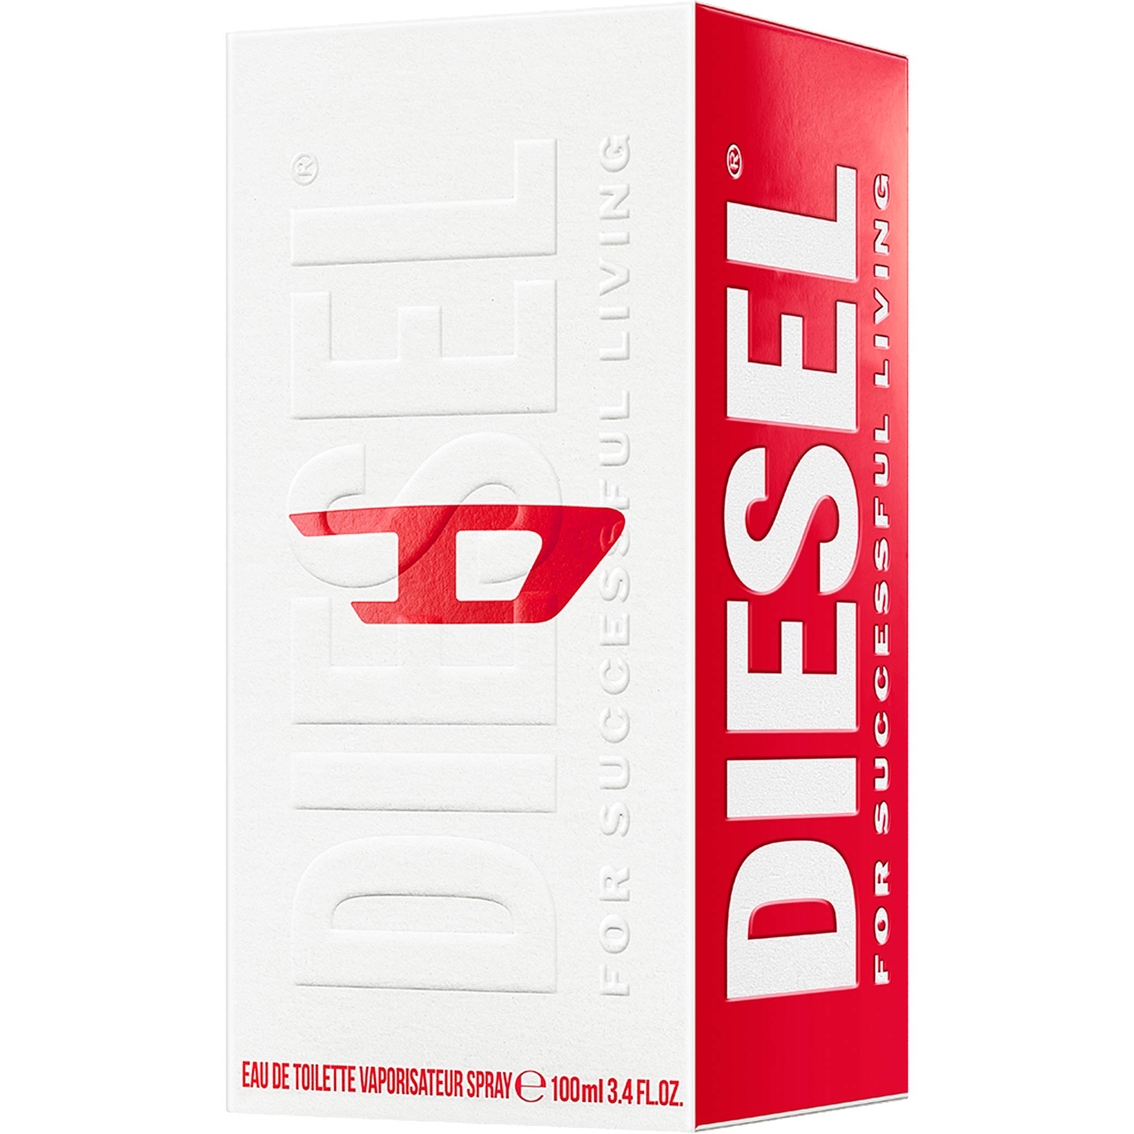 Diesel D by Diesel Eau de Toilette - Image 2 of 2